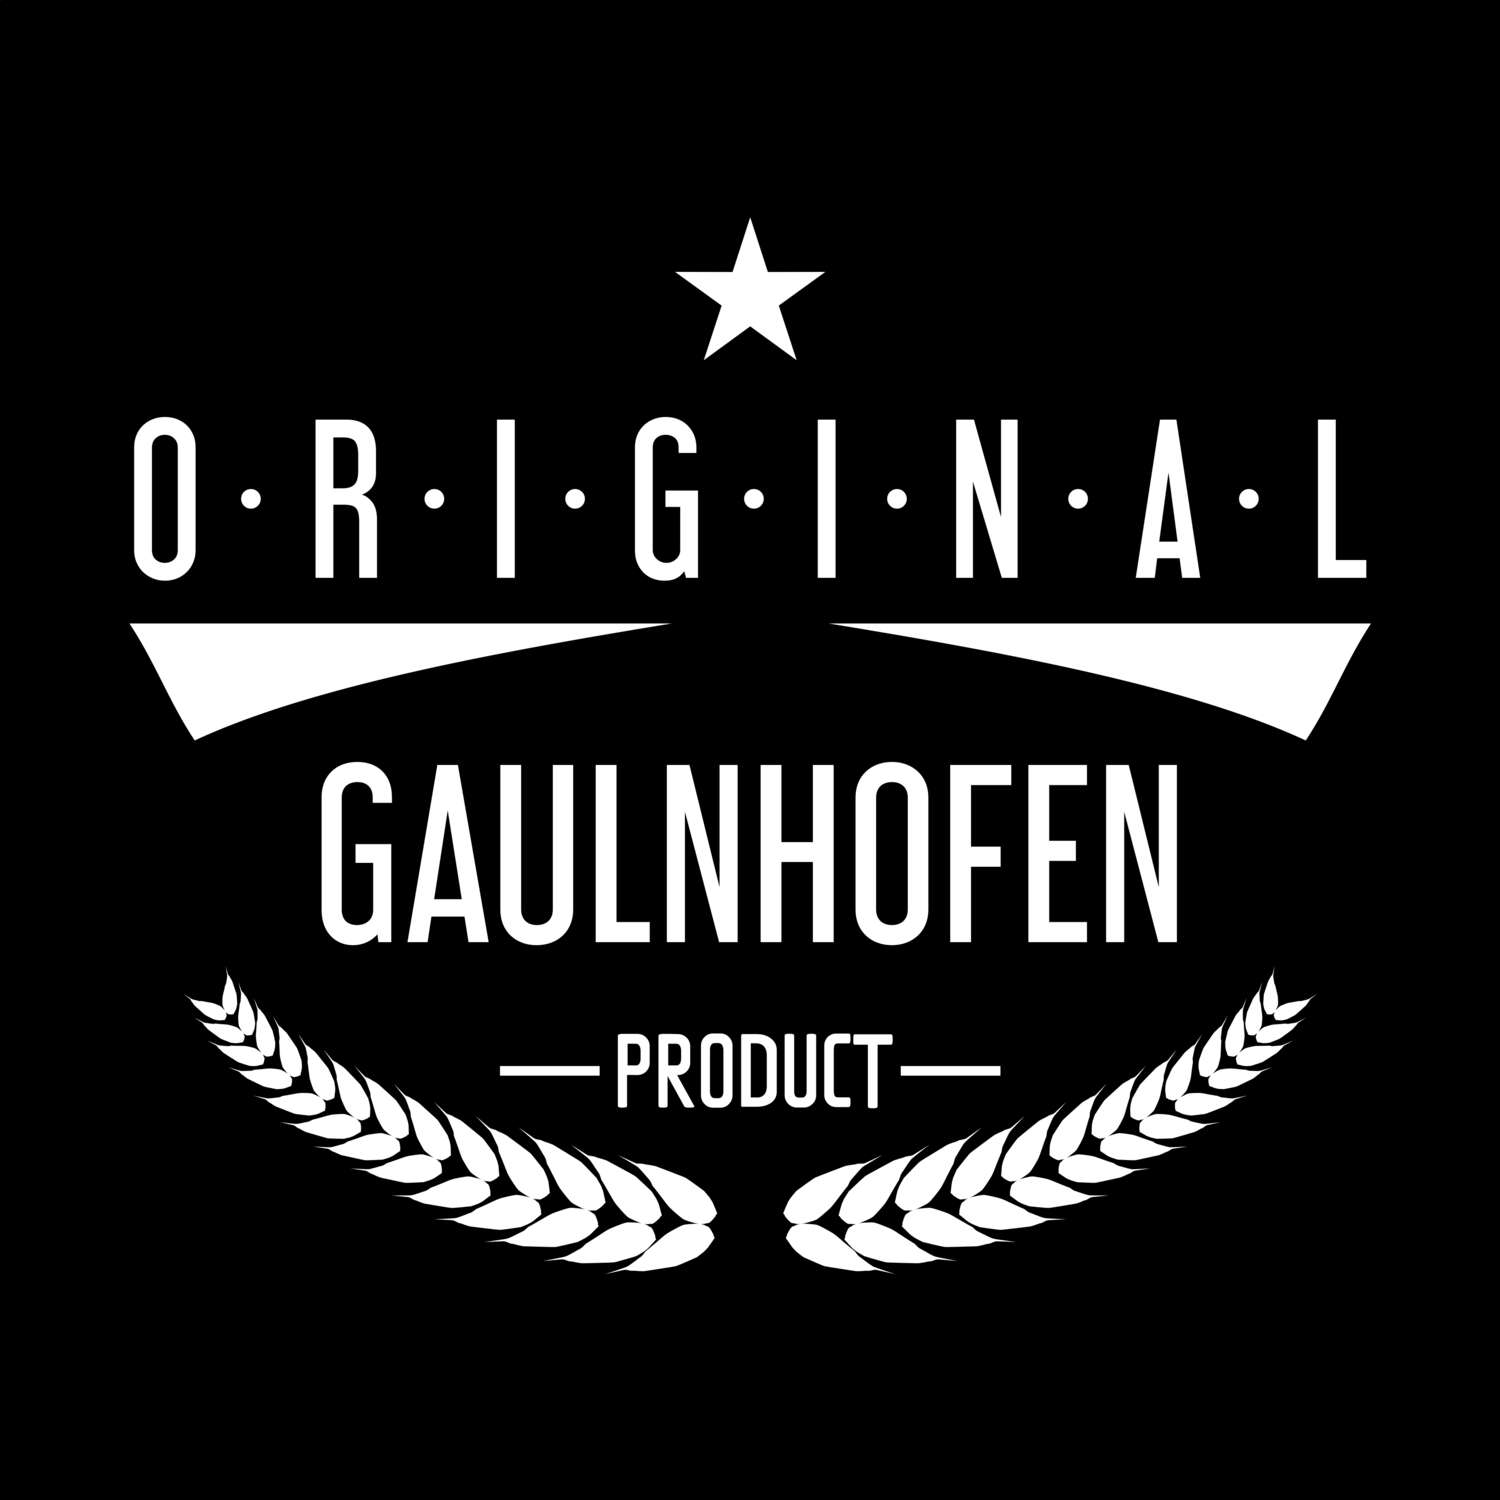 Gaulnhofen T-Shirt »Original Product«